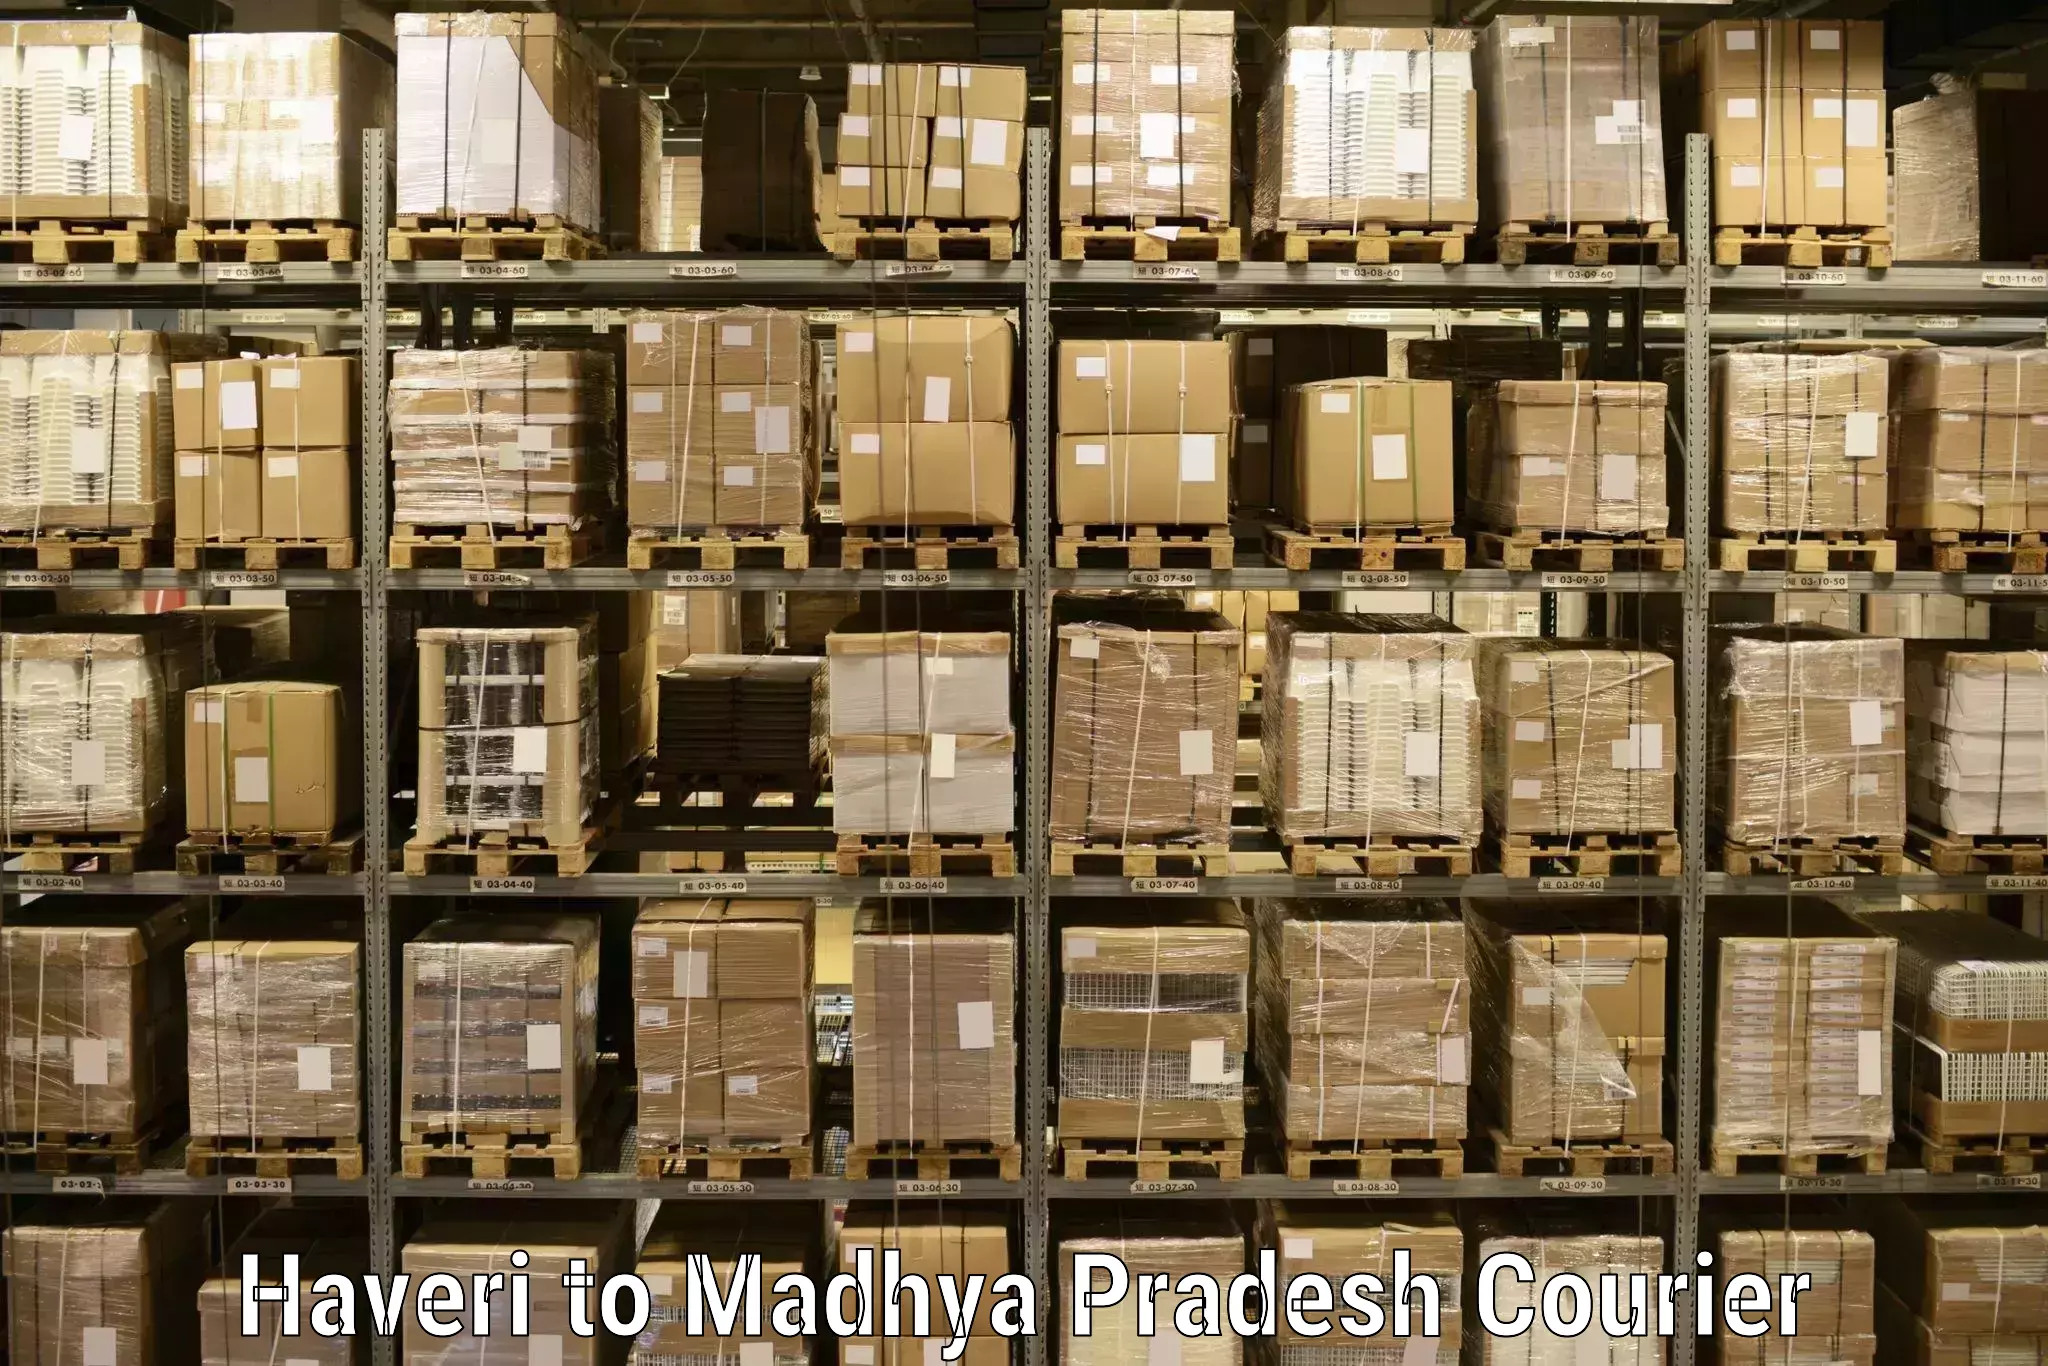 Pharmaceutical courier Haveri to Vidisha